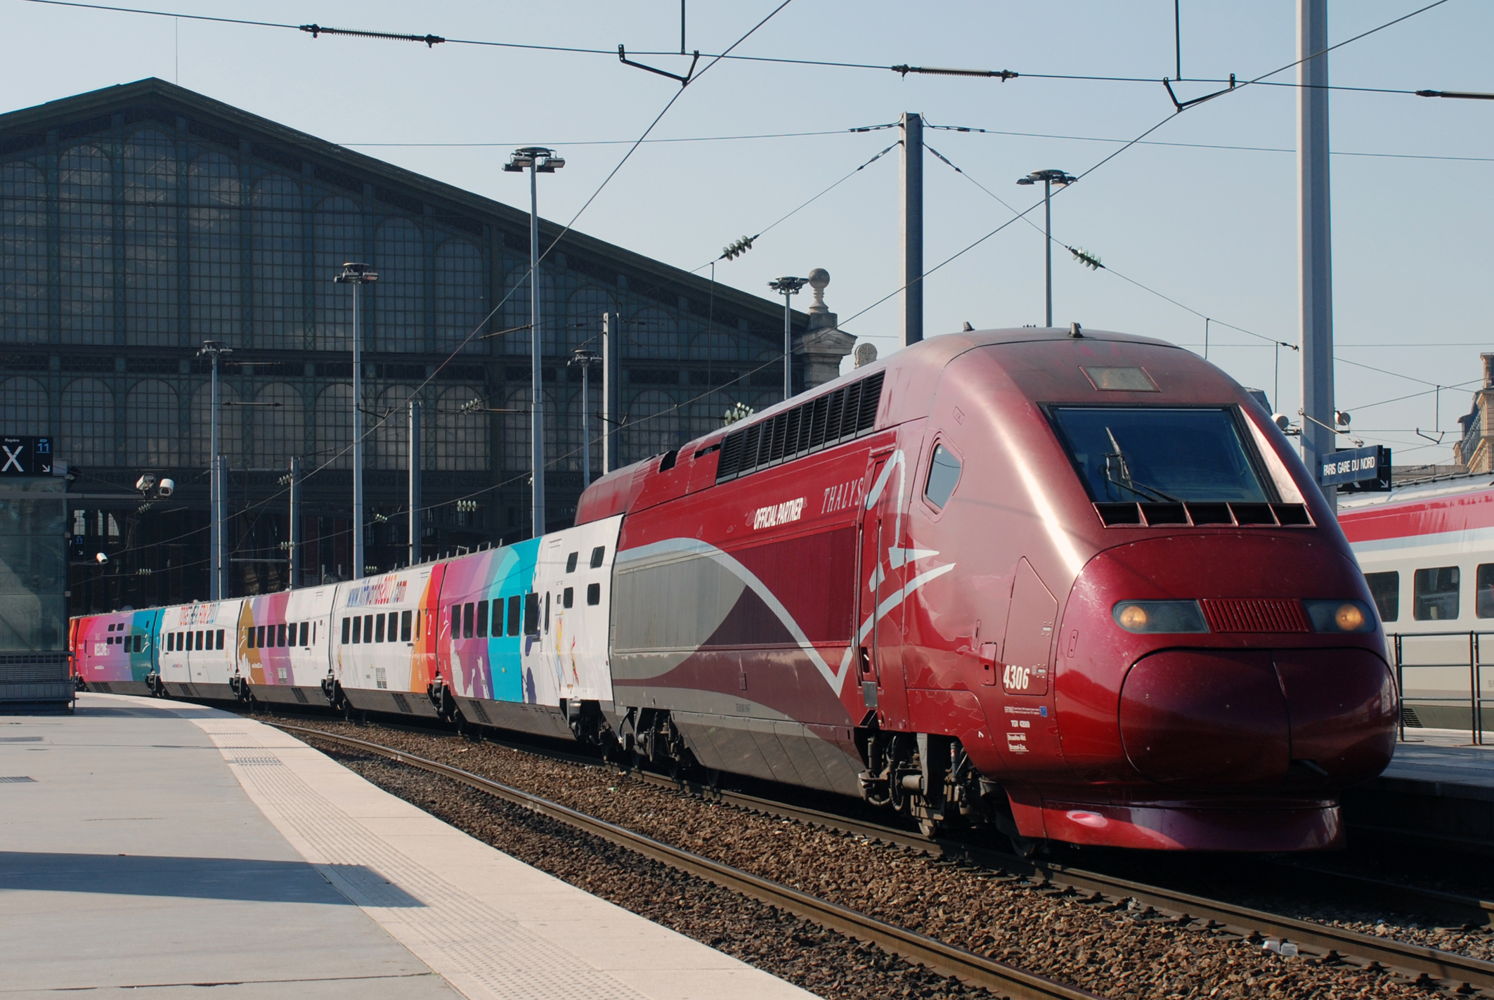 De Thalys-trein, gehuld in een speciaal WK-jasje.
©CelineJuste